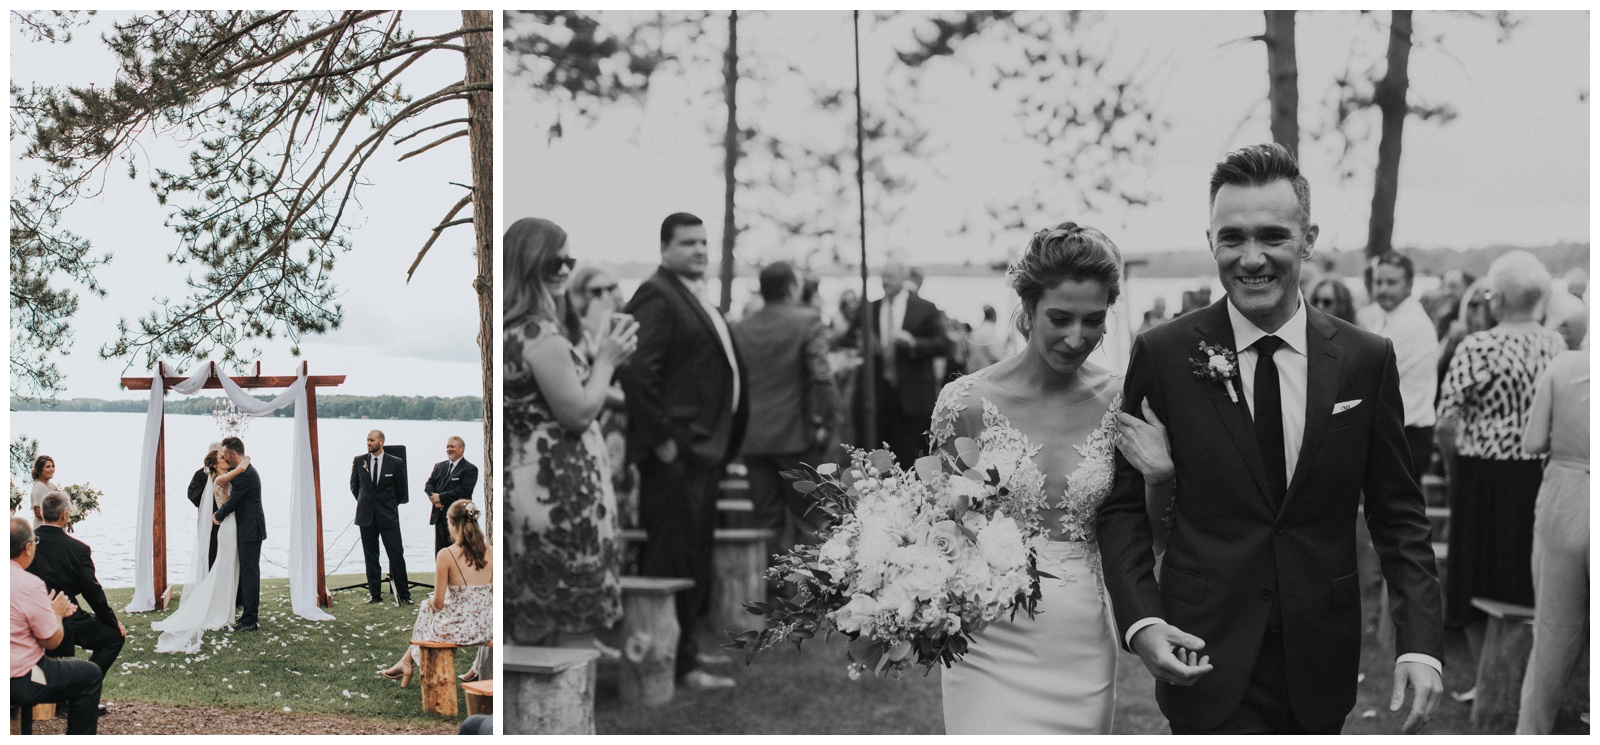 Ashley + Charles // A Northern Wisconsin Wedding